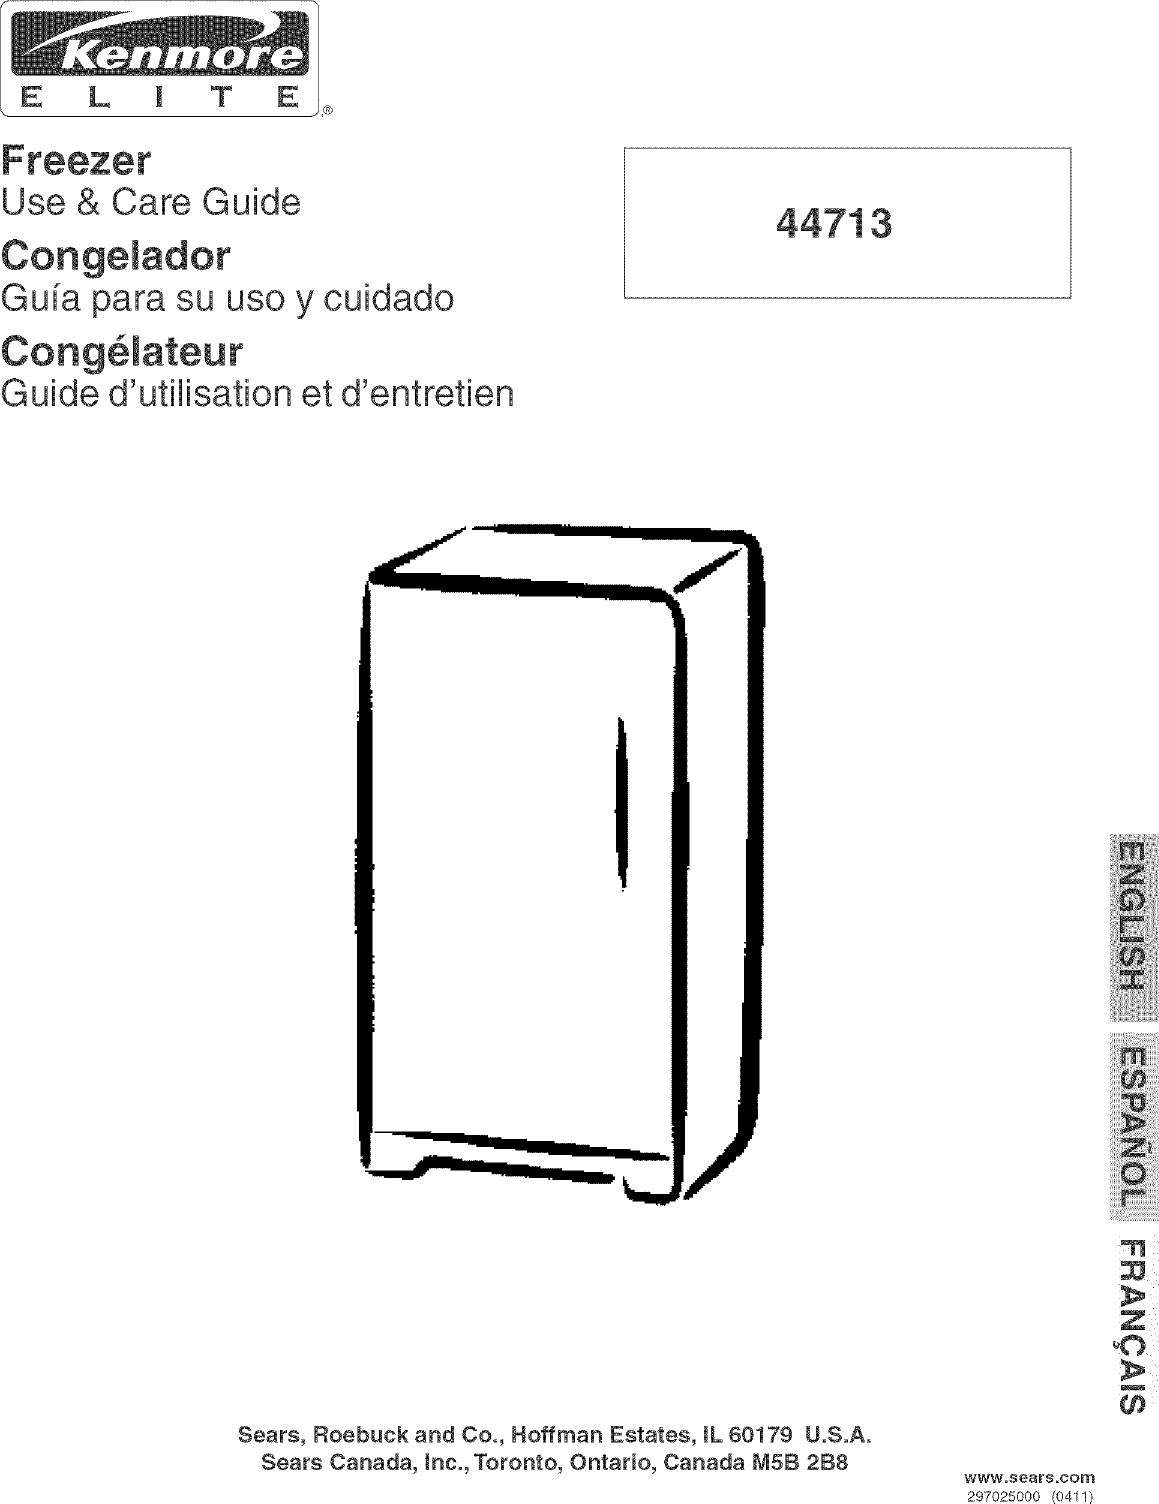 Page 1 of 12 - KENMORE  ELITE Upright Freezer Manual L0504504